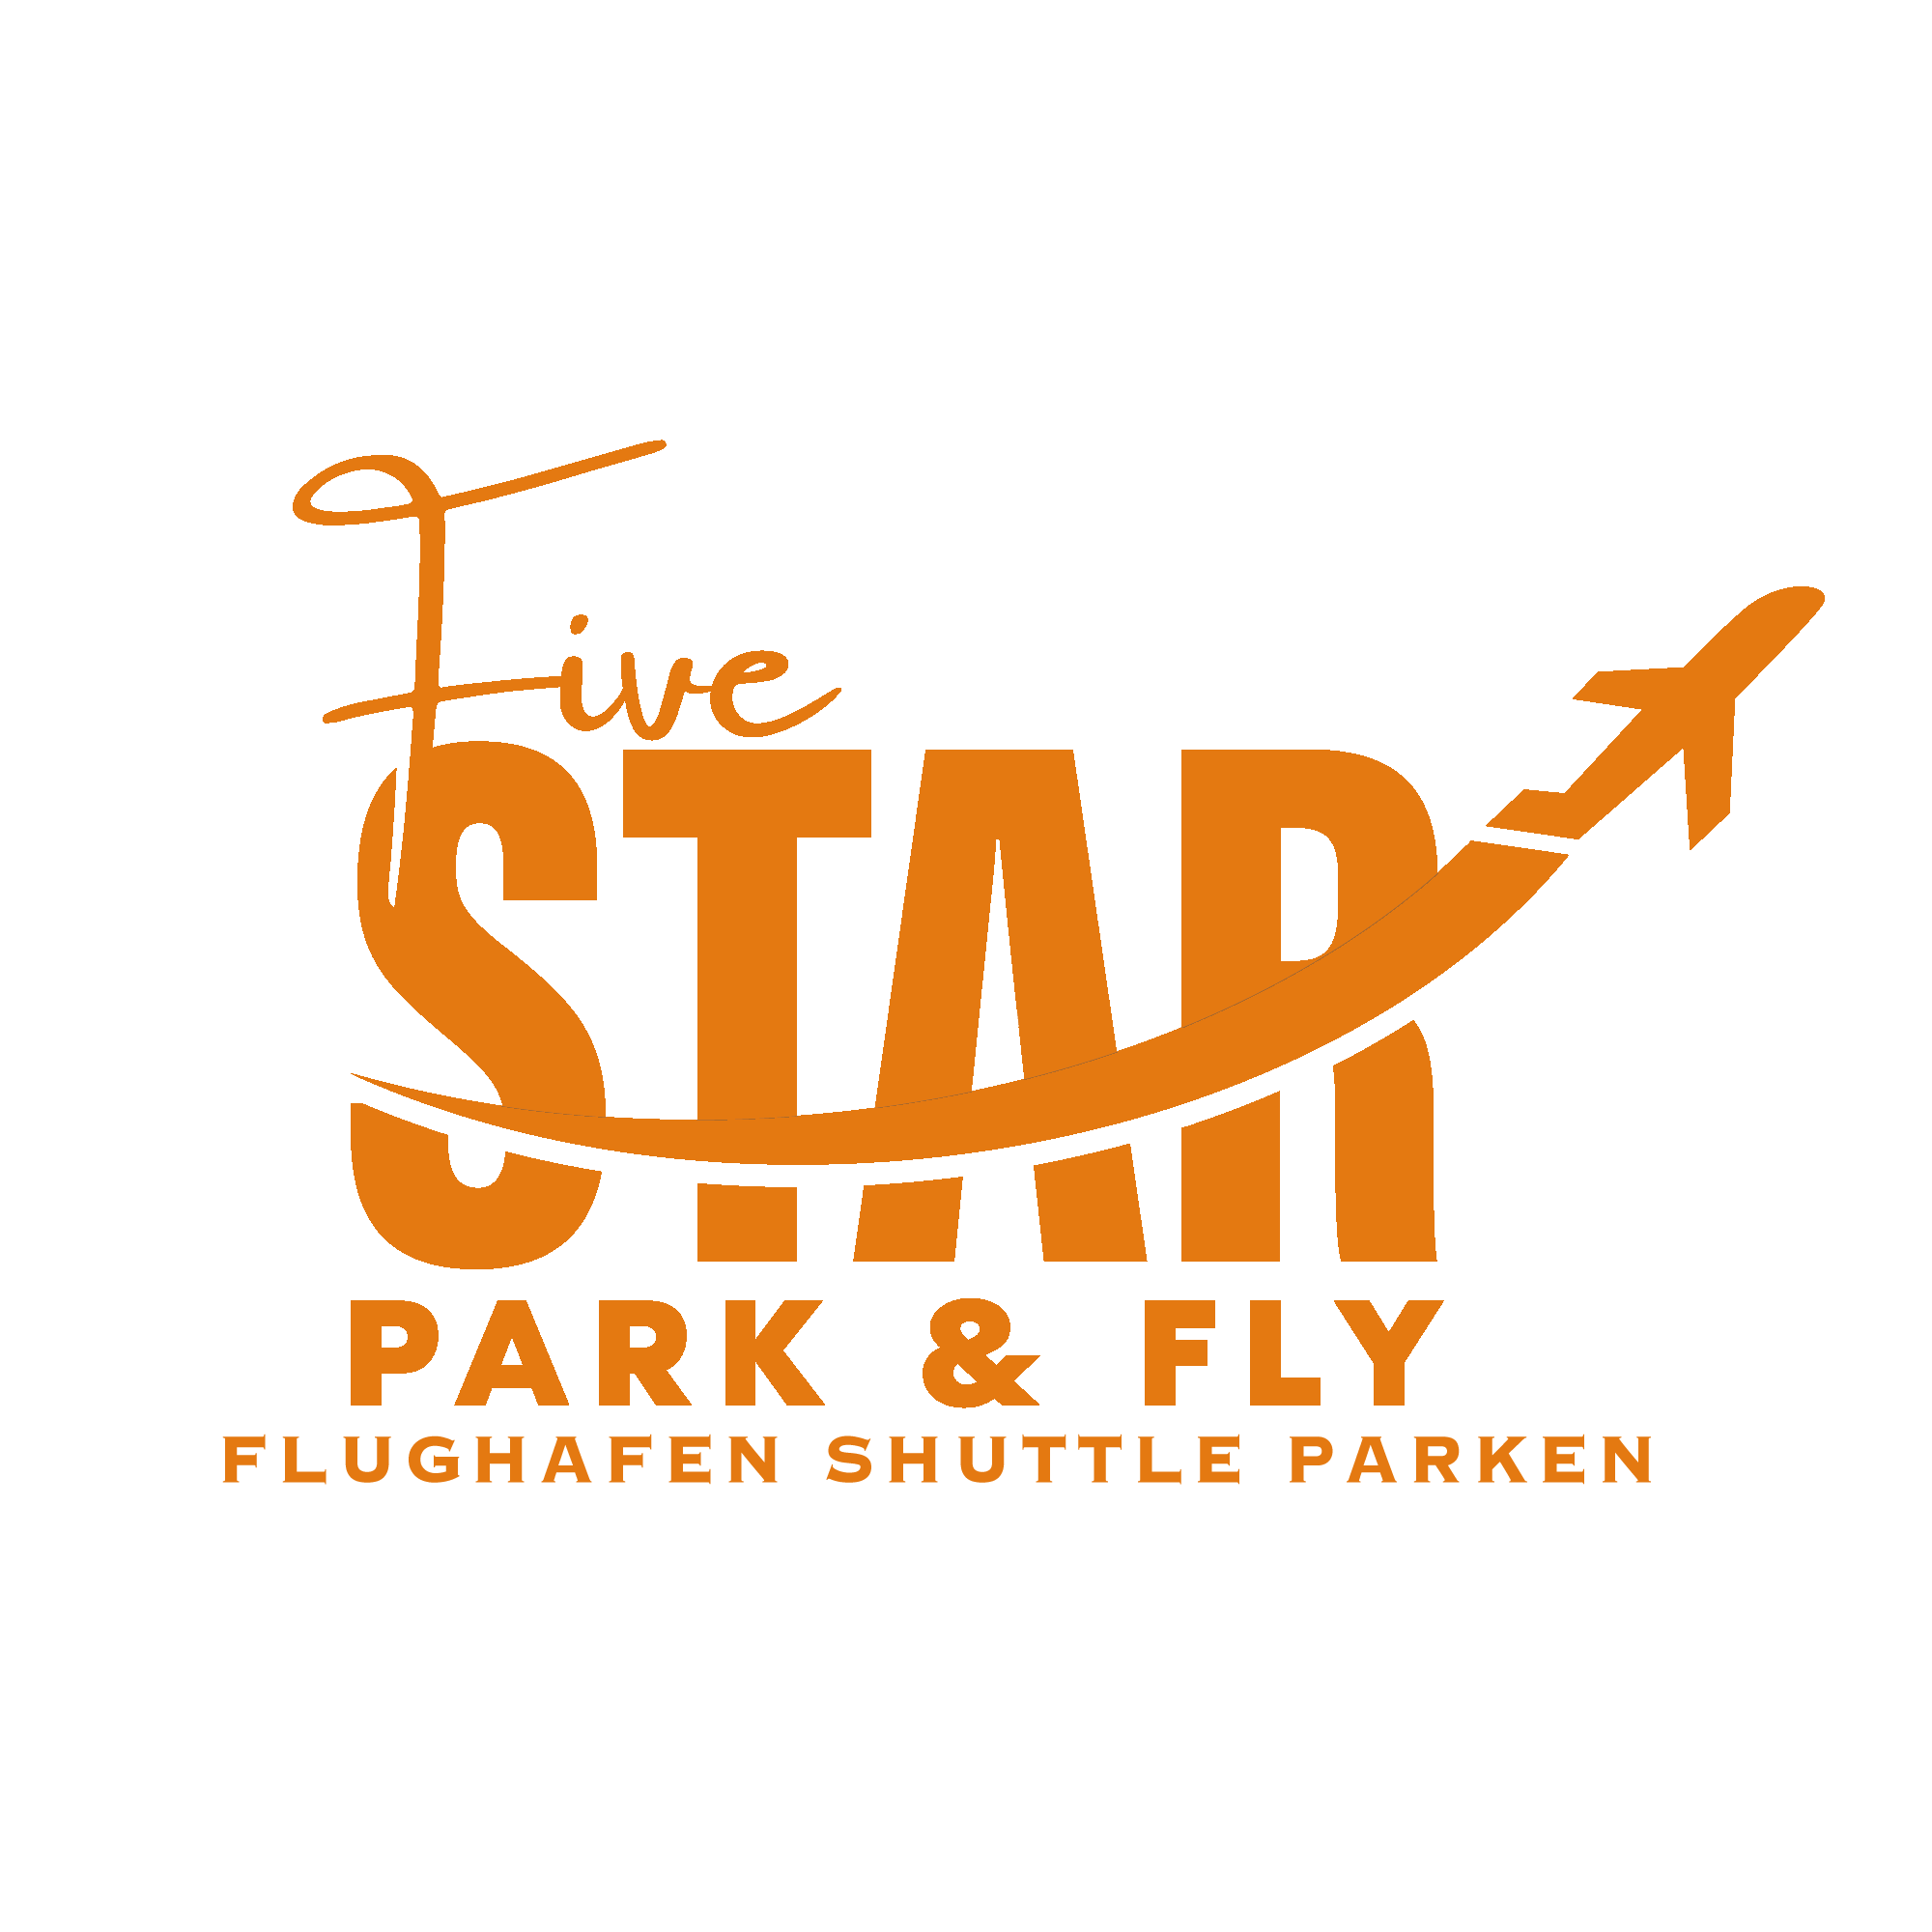 Five Star Park & Fly Shuttle Hamburg logo